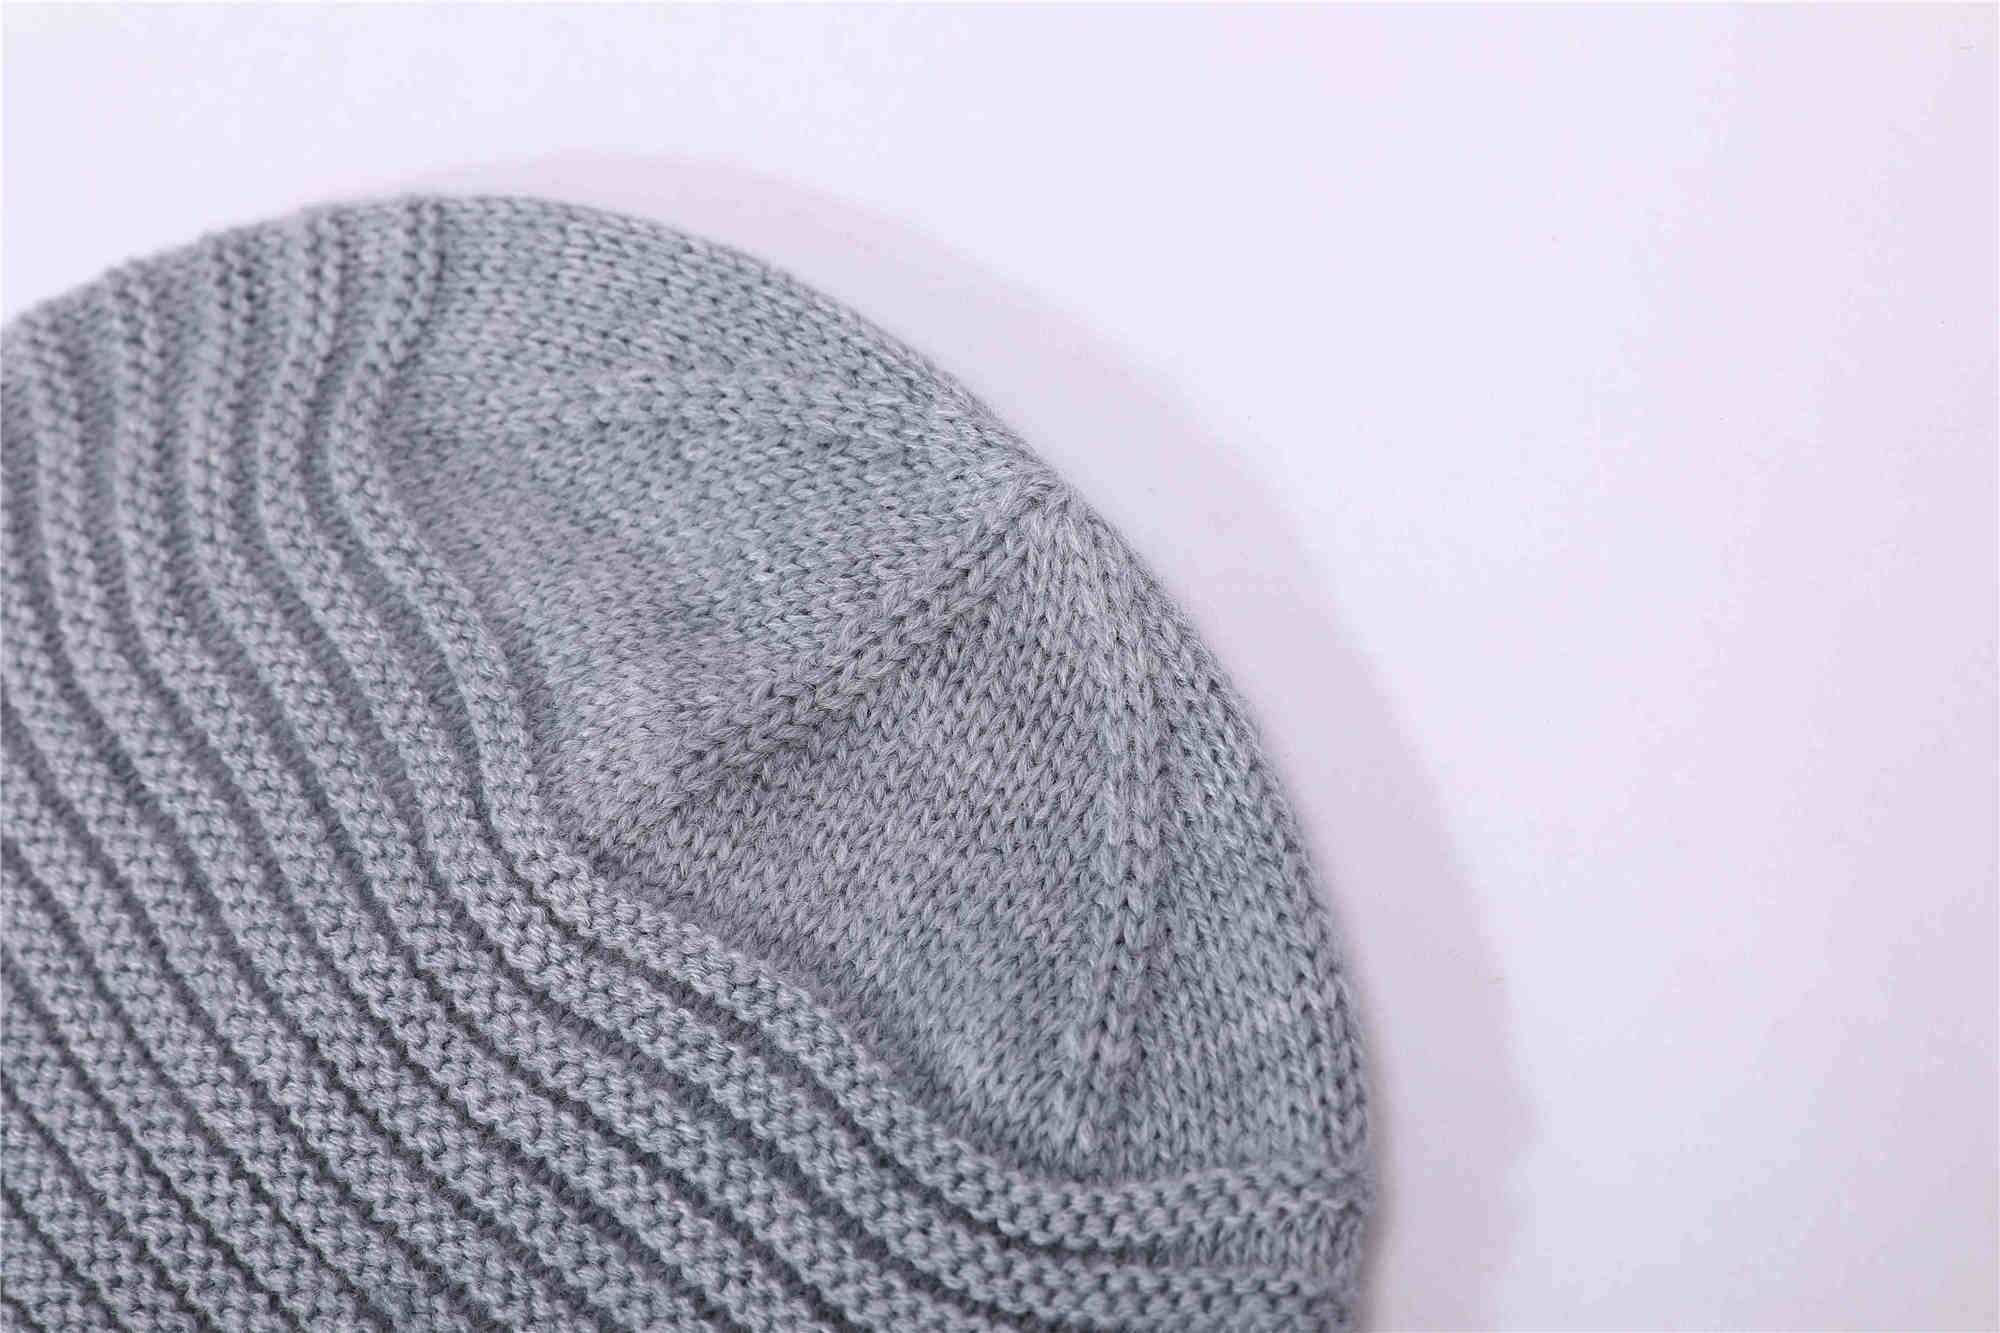 knit men's hat straight needles